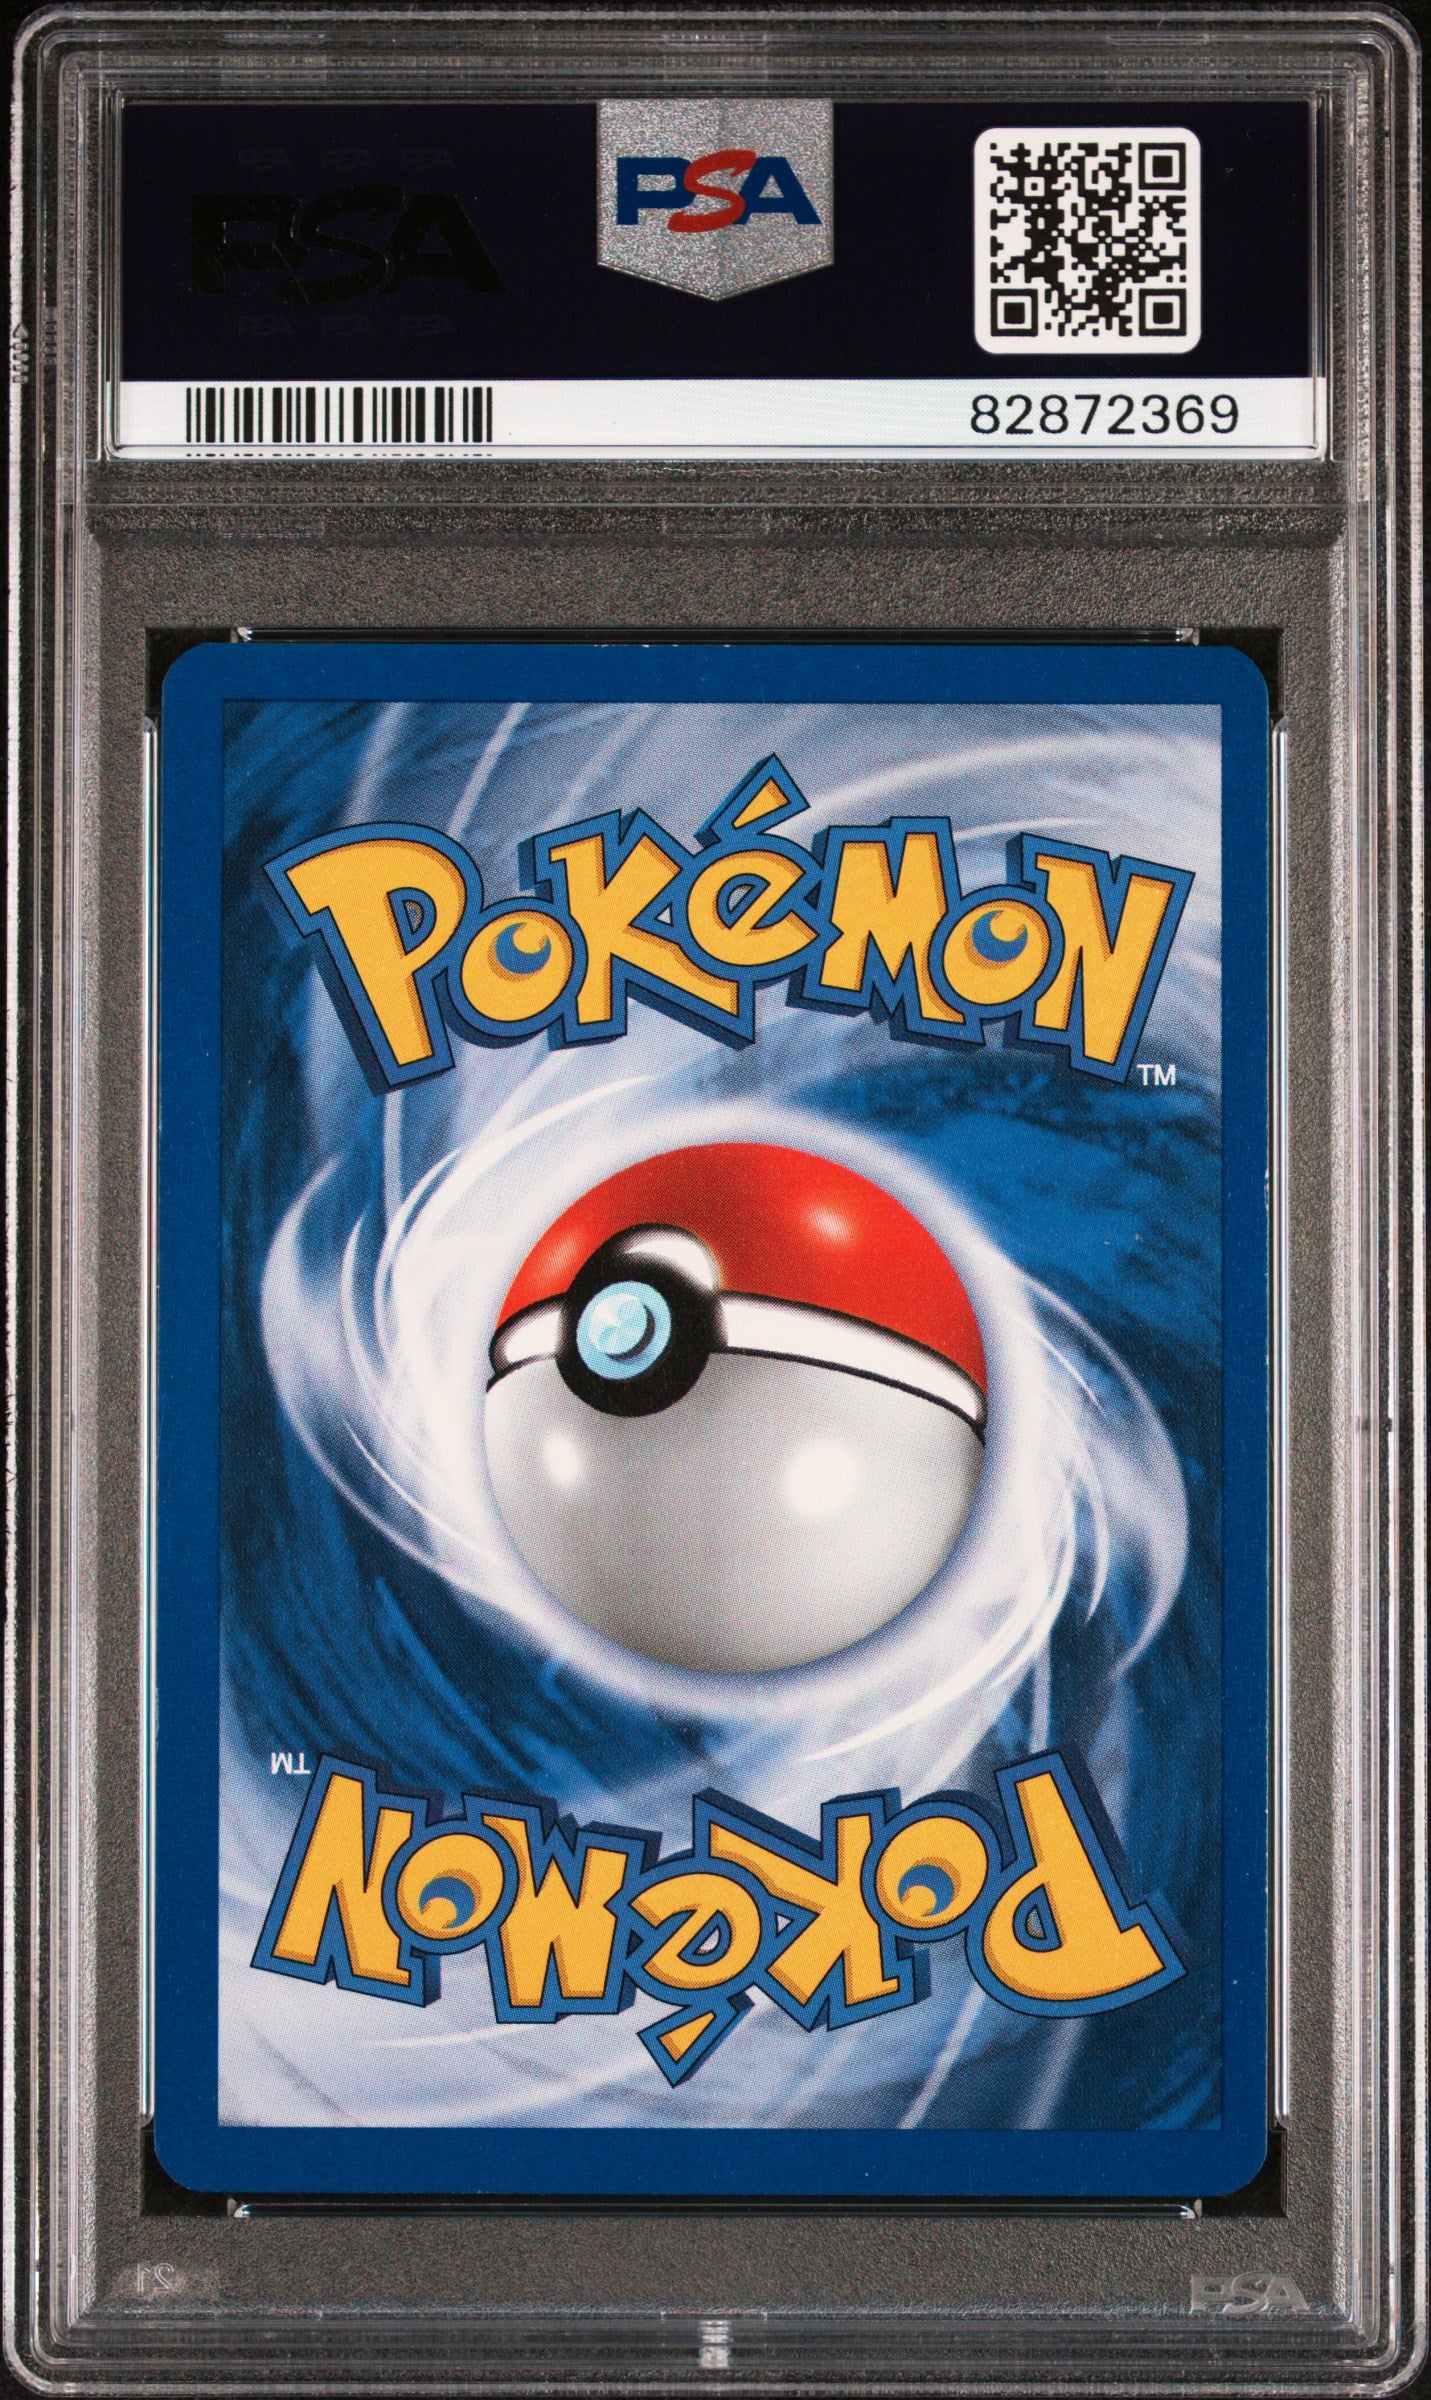 2000 Pokemon Rocket #2 Dark Arbok-Holo PSA 8